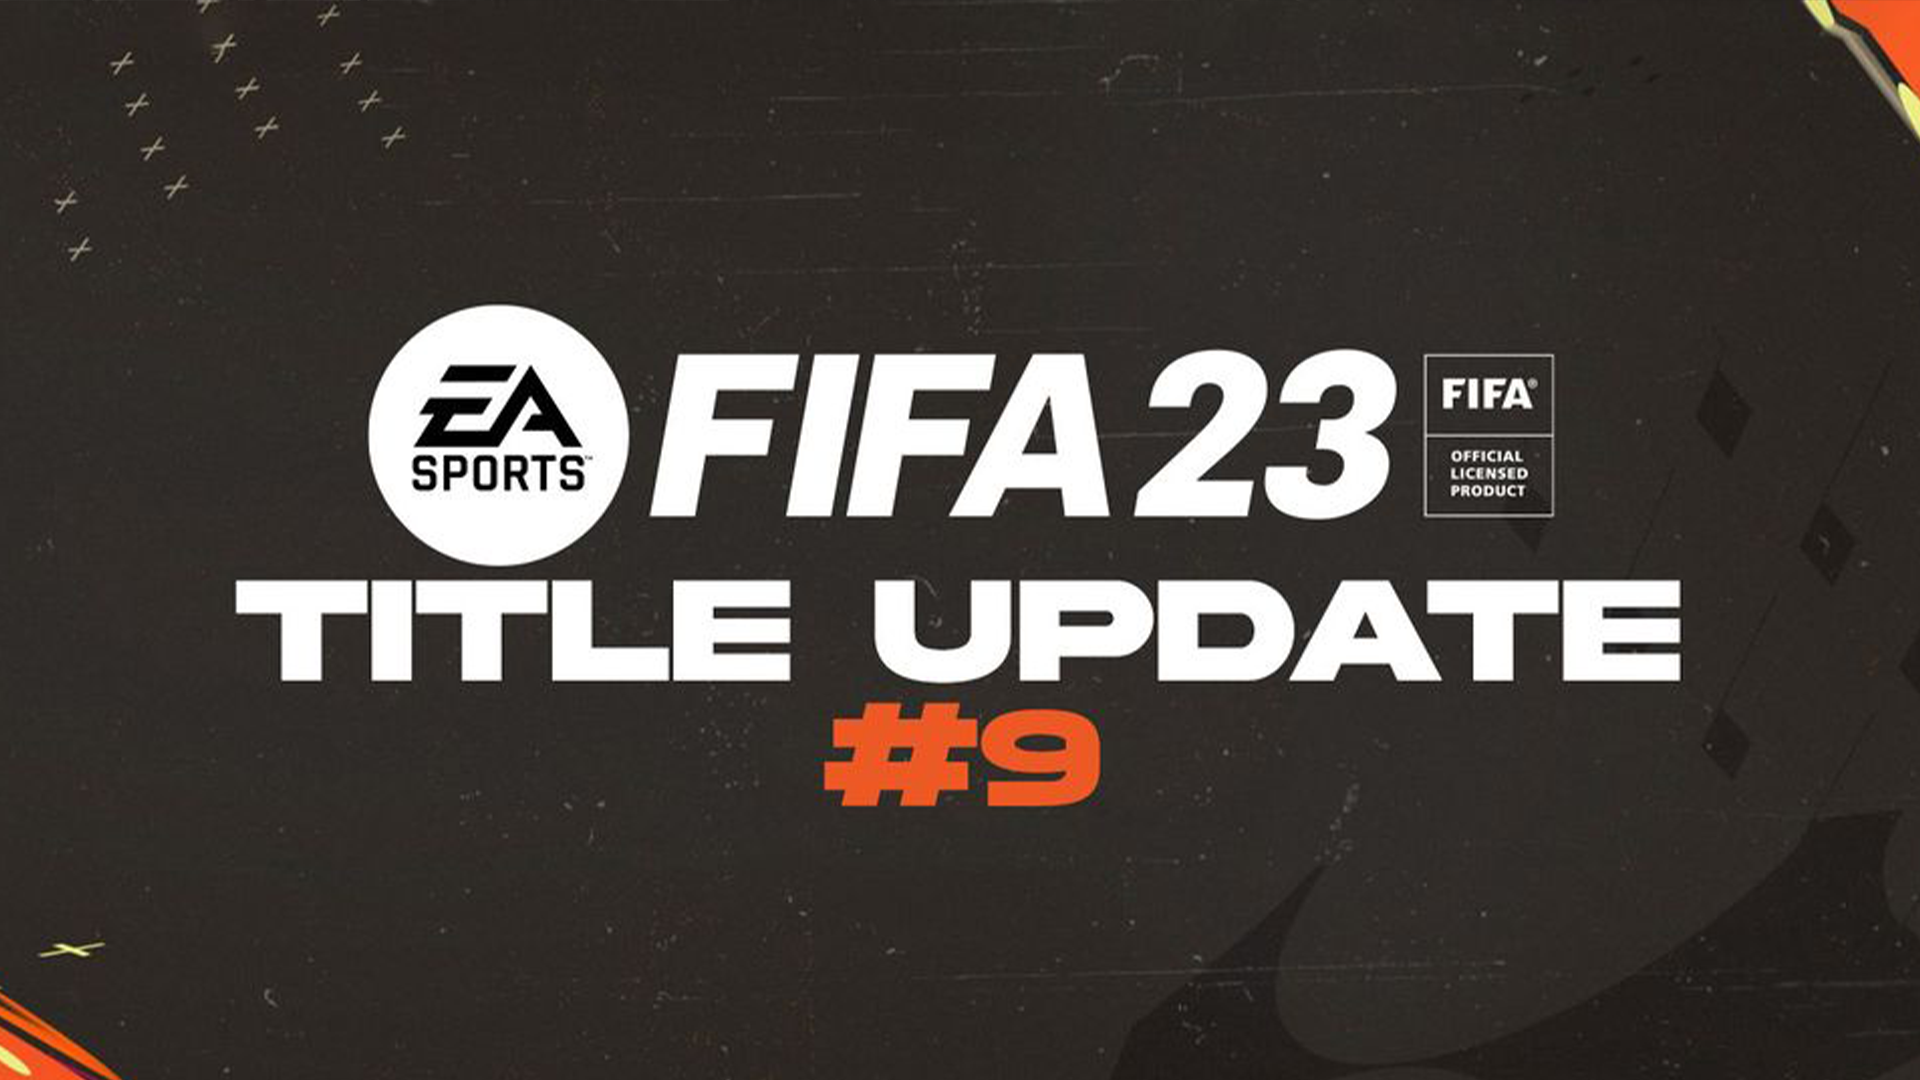 Моды ФИФА 24. FIFA 23 моды. FIFA 23 title update 8.